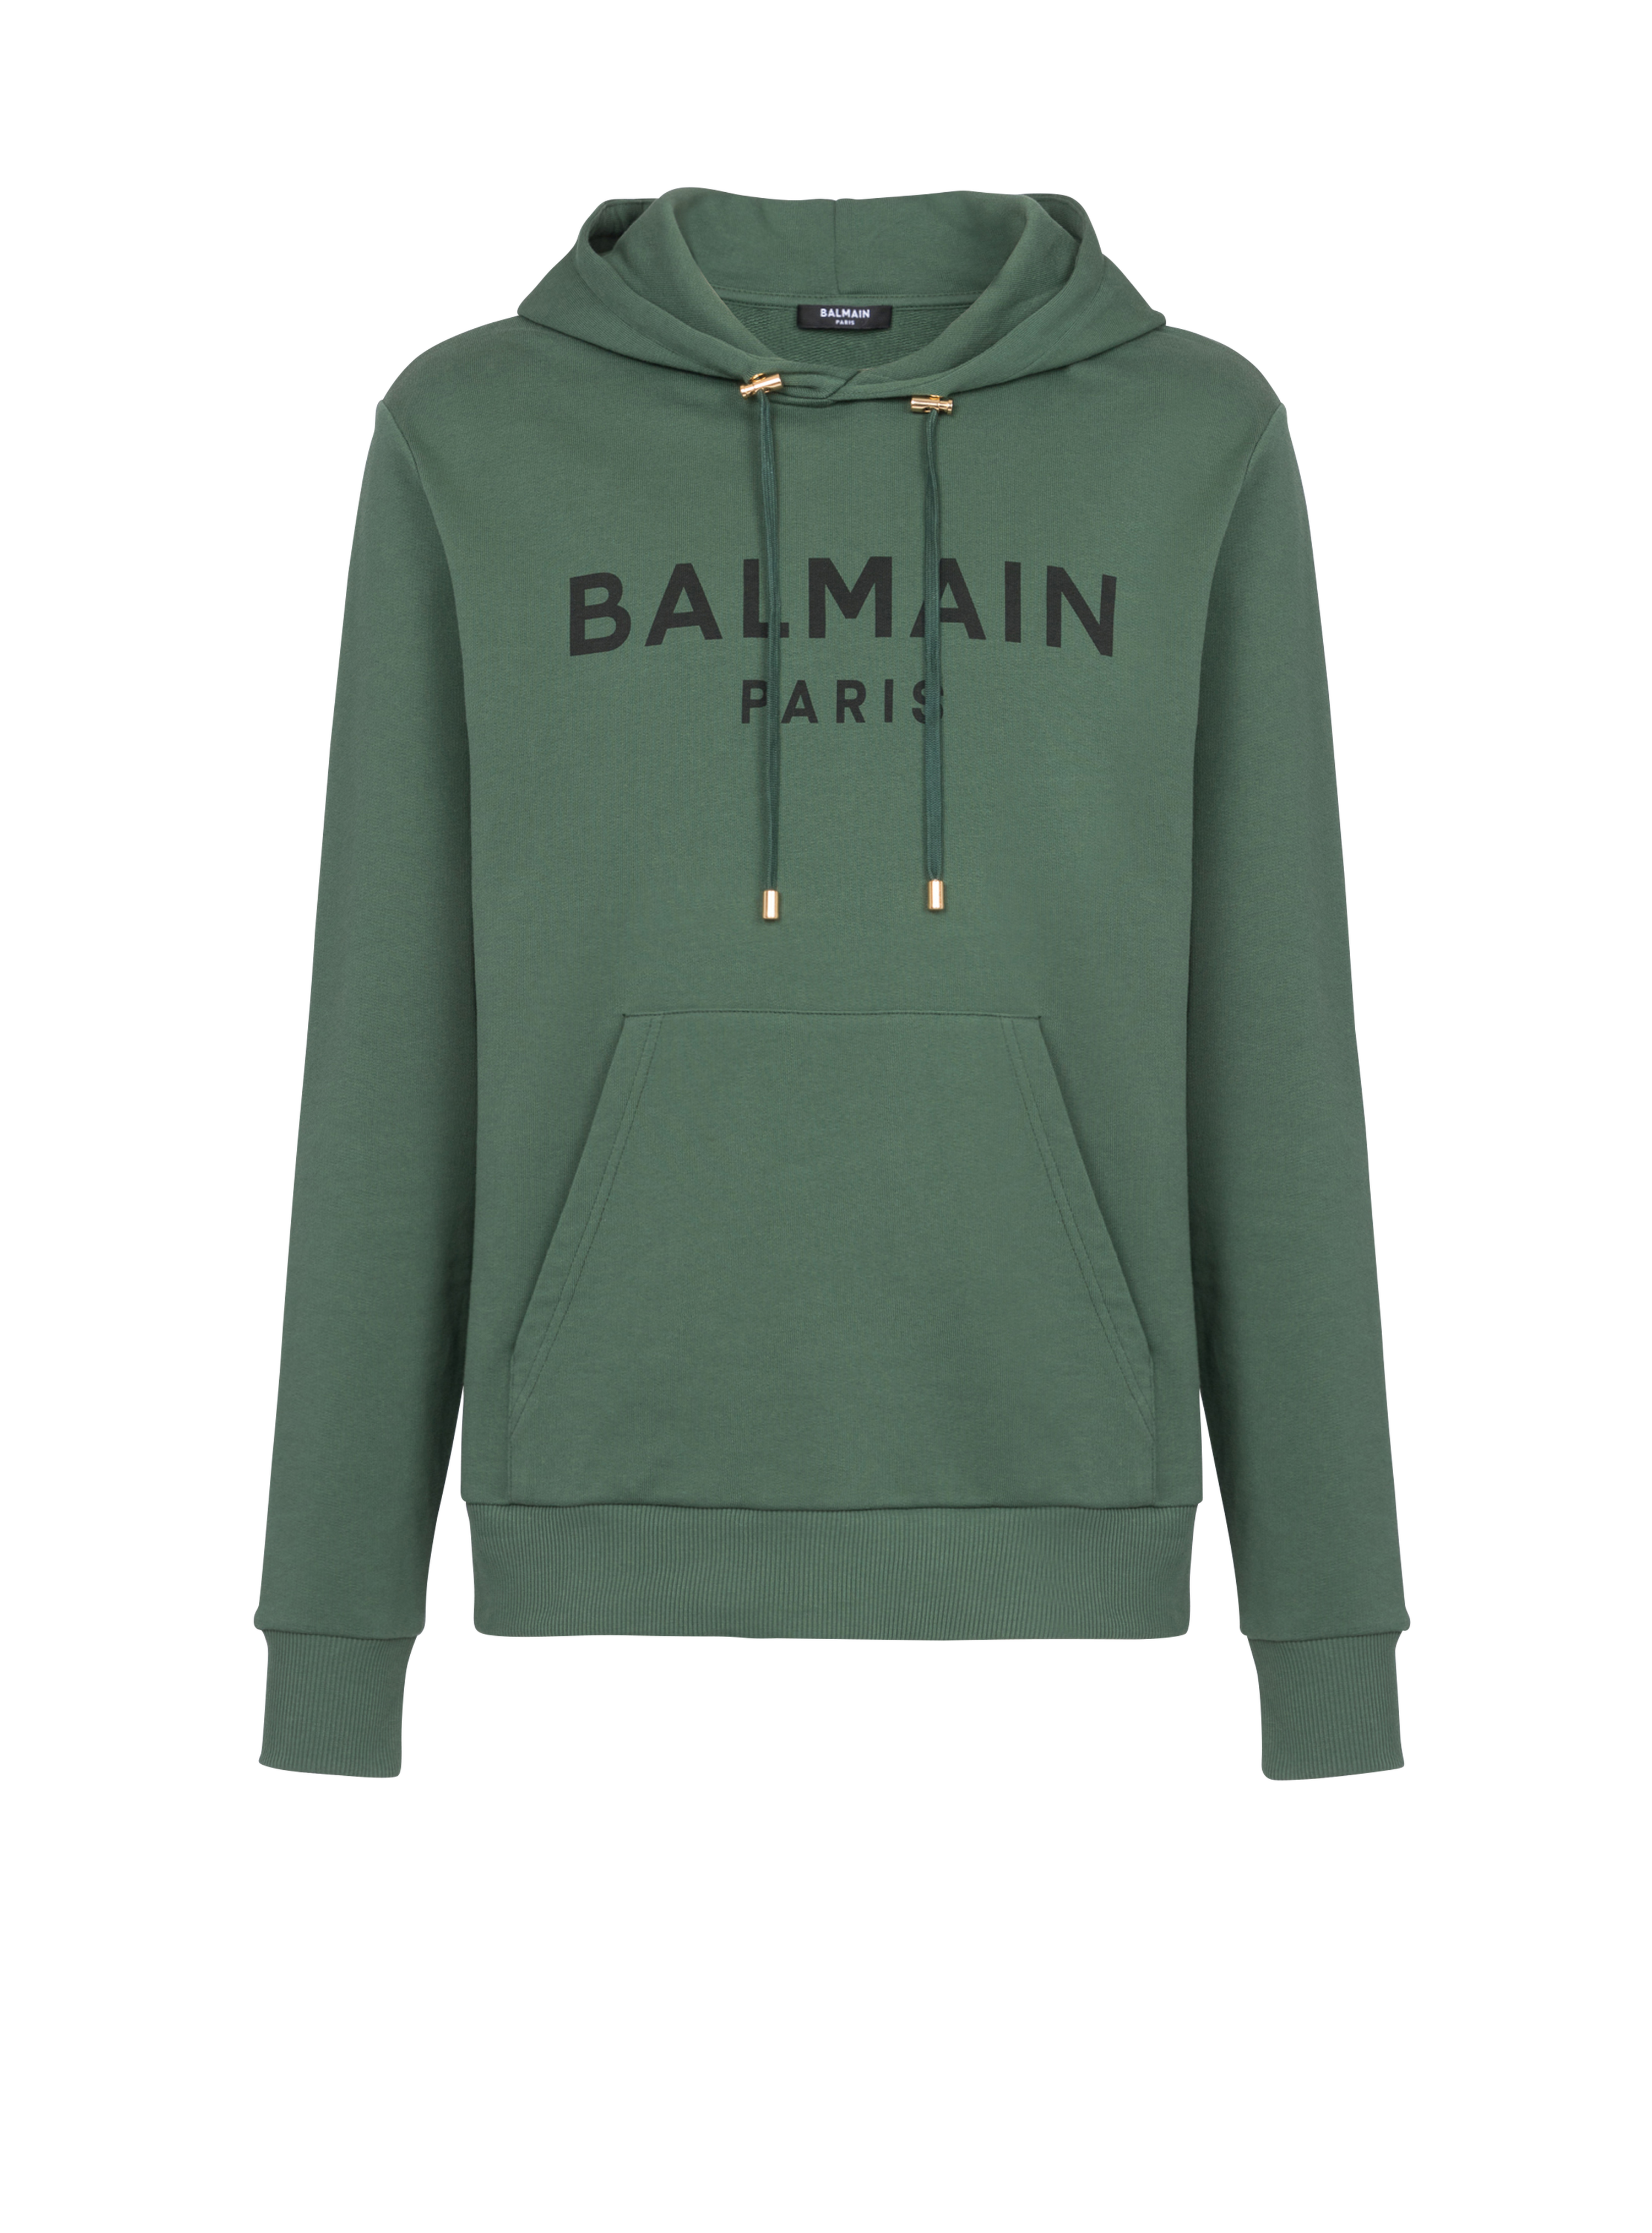 Hooded cotton sweatshirt with Balmain Paris logo print, green